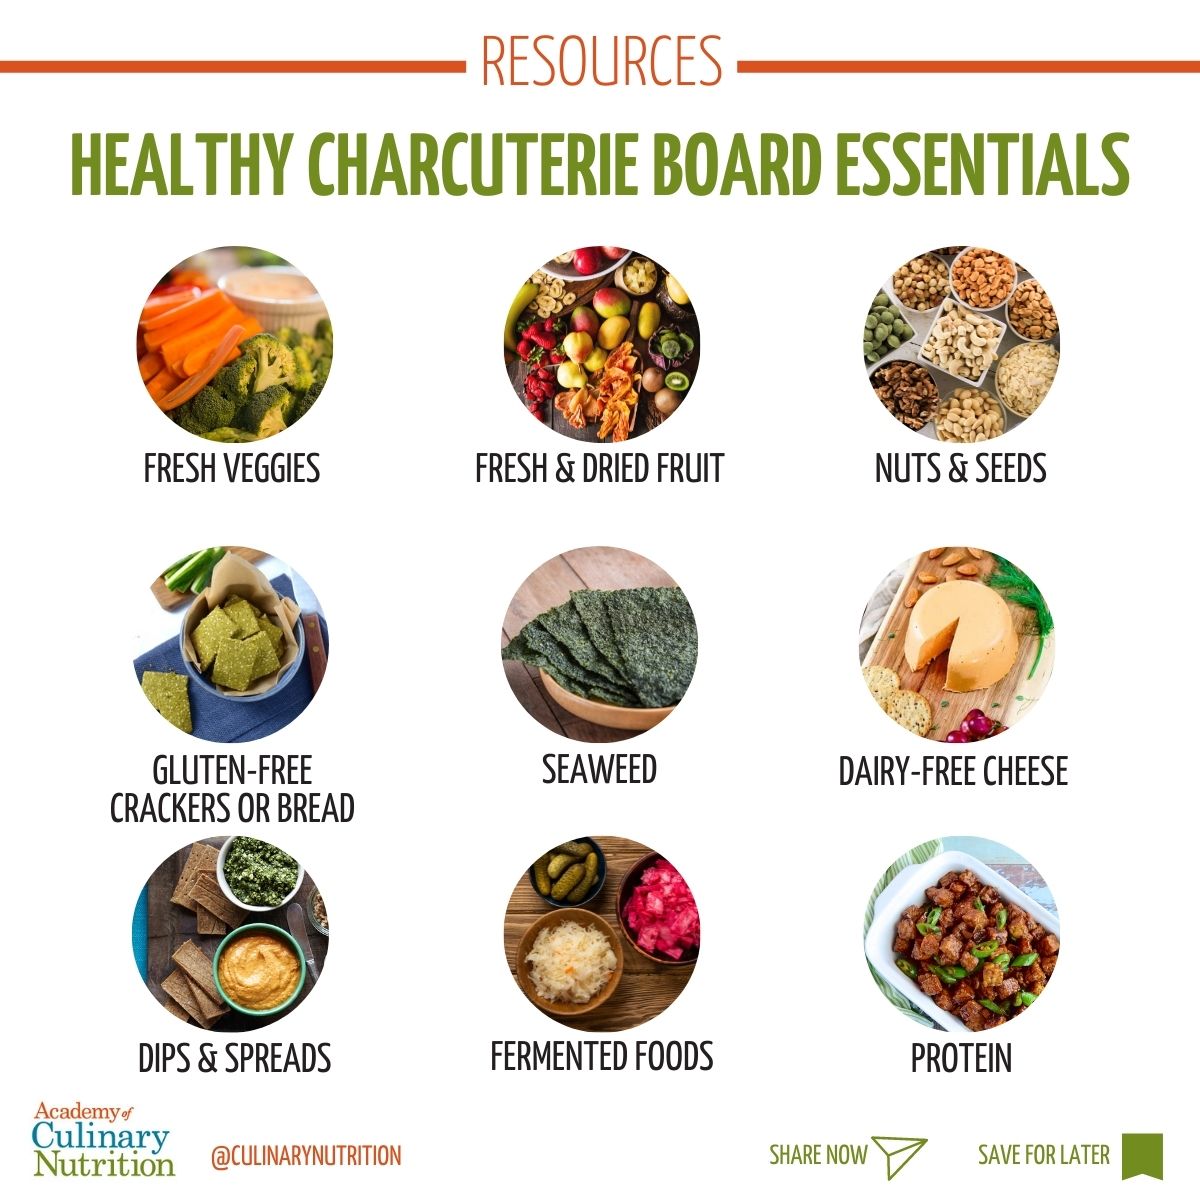 Healthy Charcuterie Board ideas